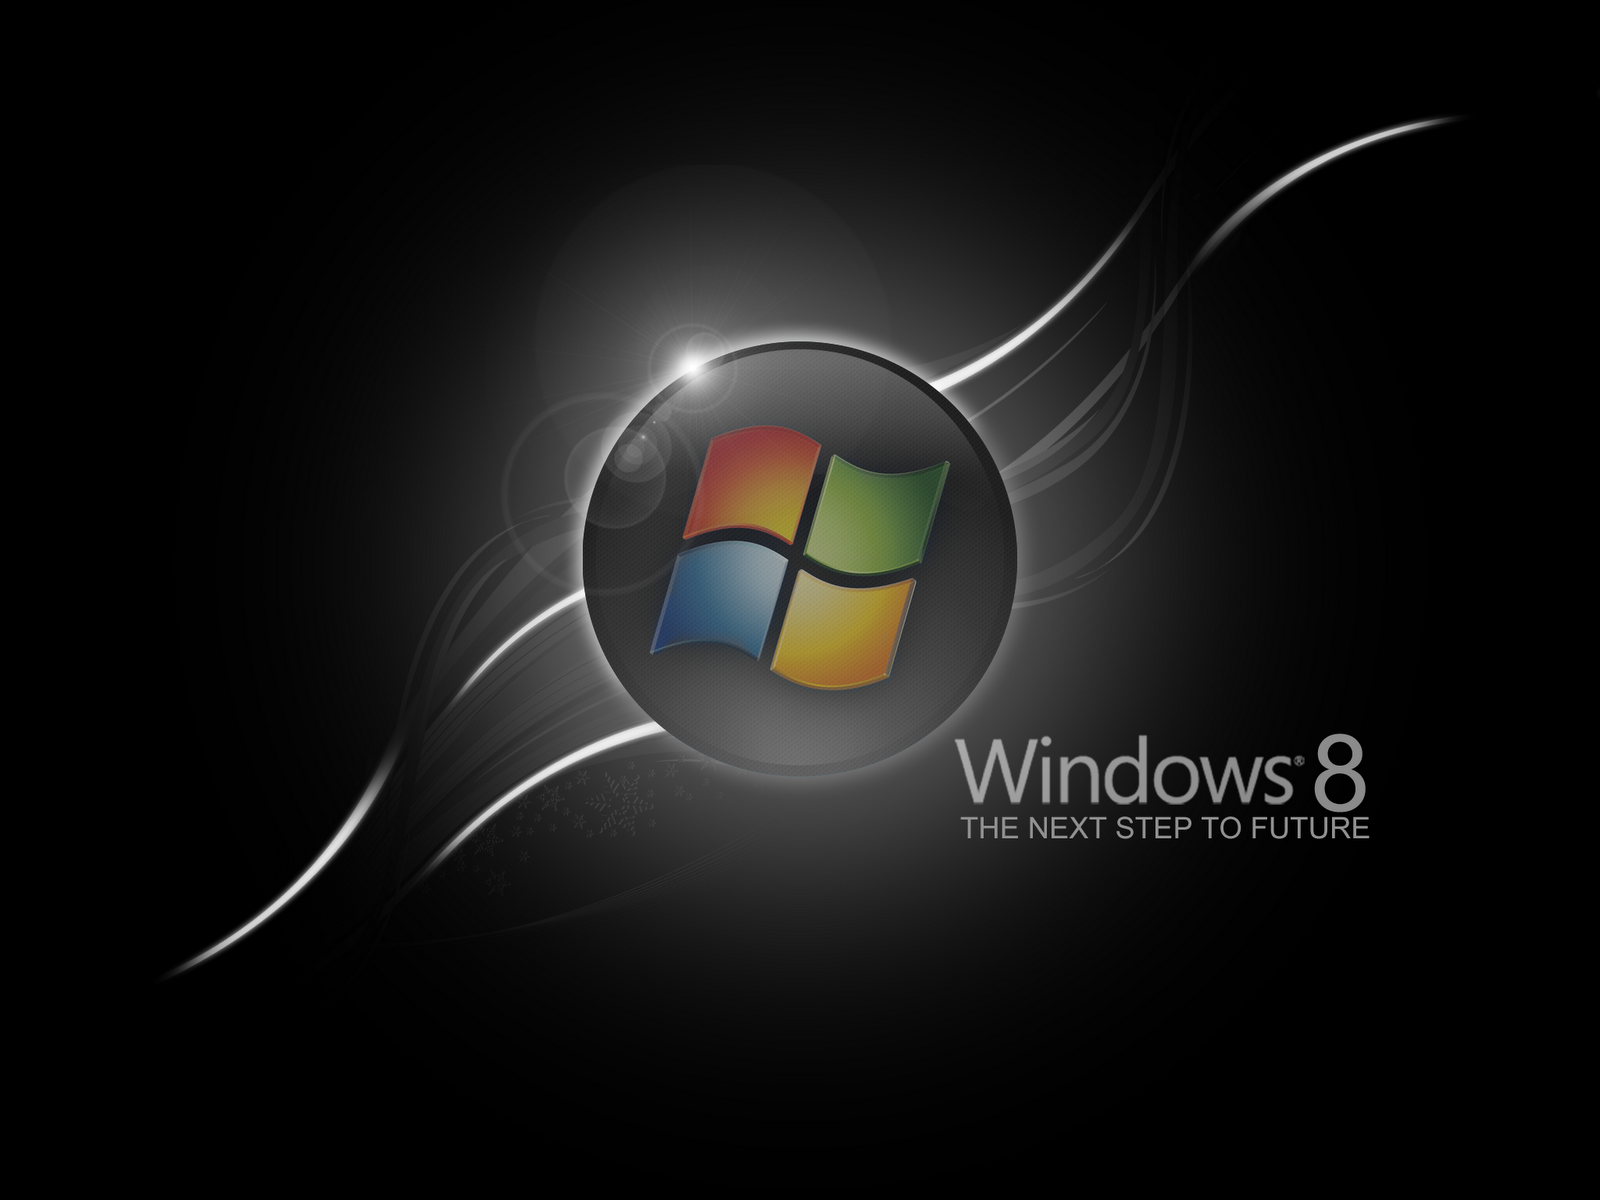 Free Download Hd Wallpaper Windows 8 Hd Wallpaper Windows 8 Hd Wallpaper Windows 8 1600x10 For Your Desktop Mobile Tablet Explore 51 Windows 8 Wallpaper Hd Windows 8 1 Hd